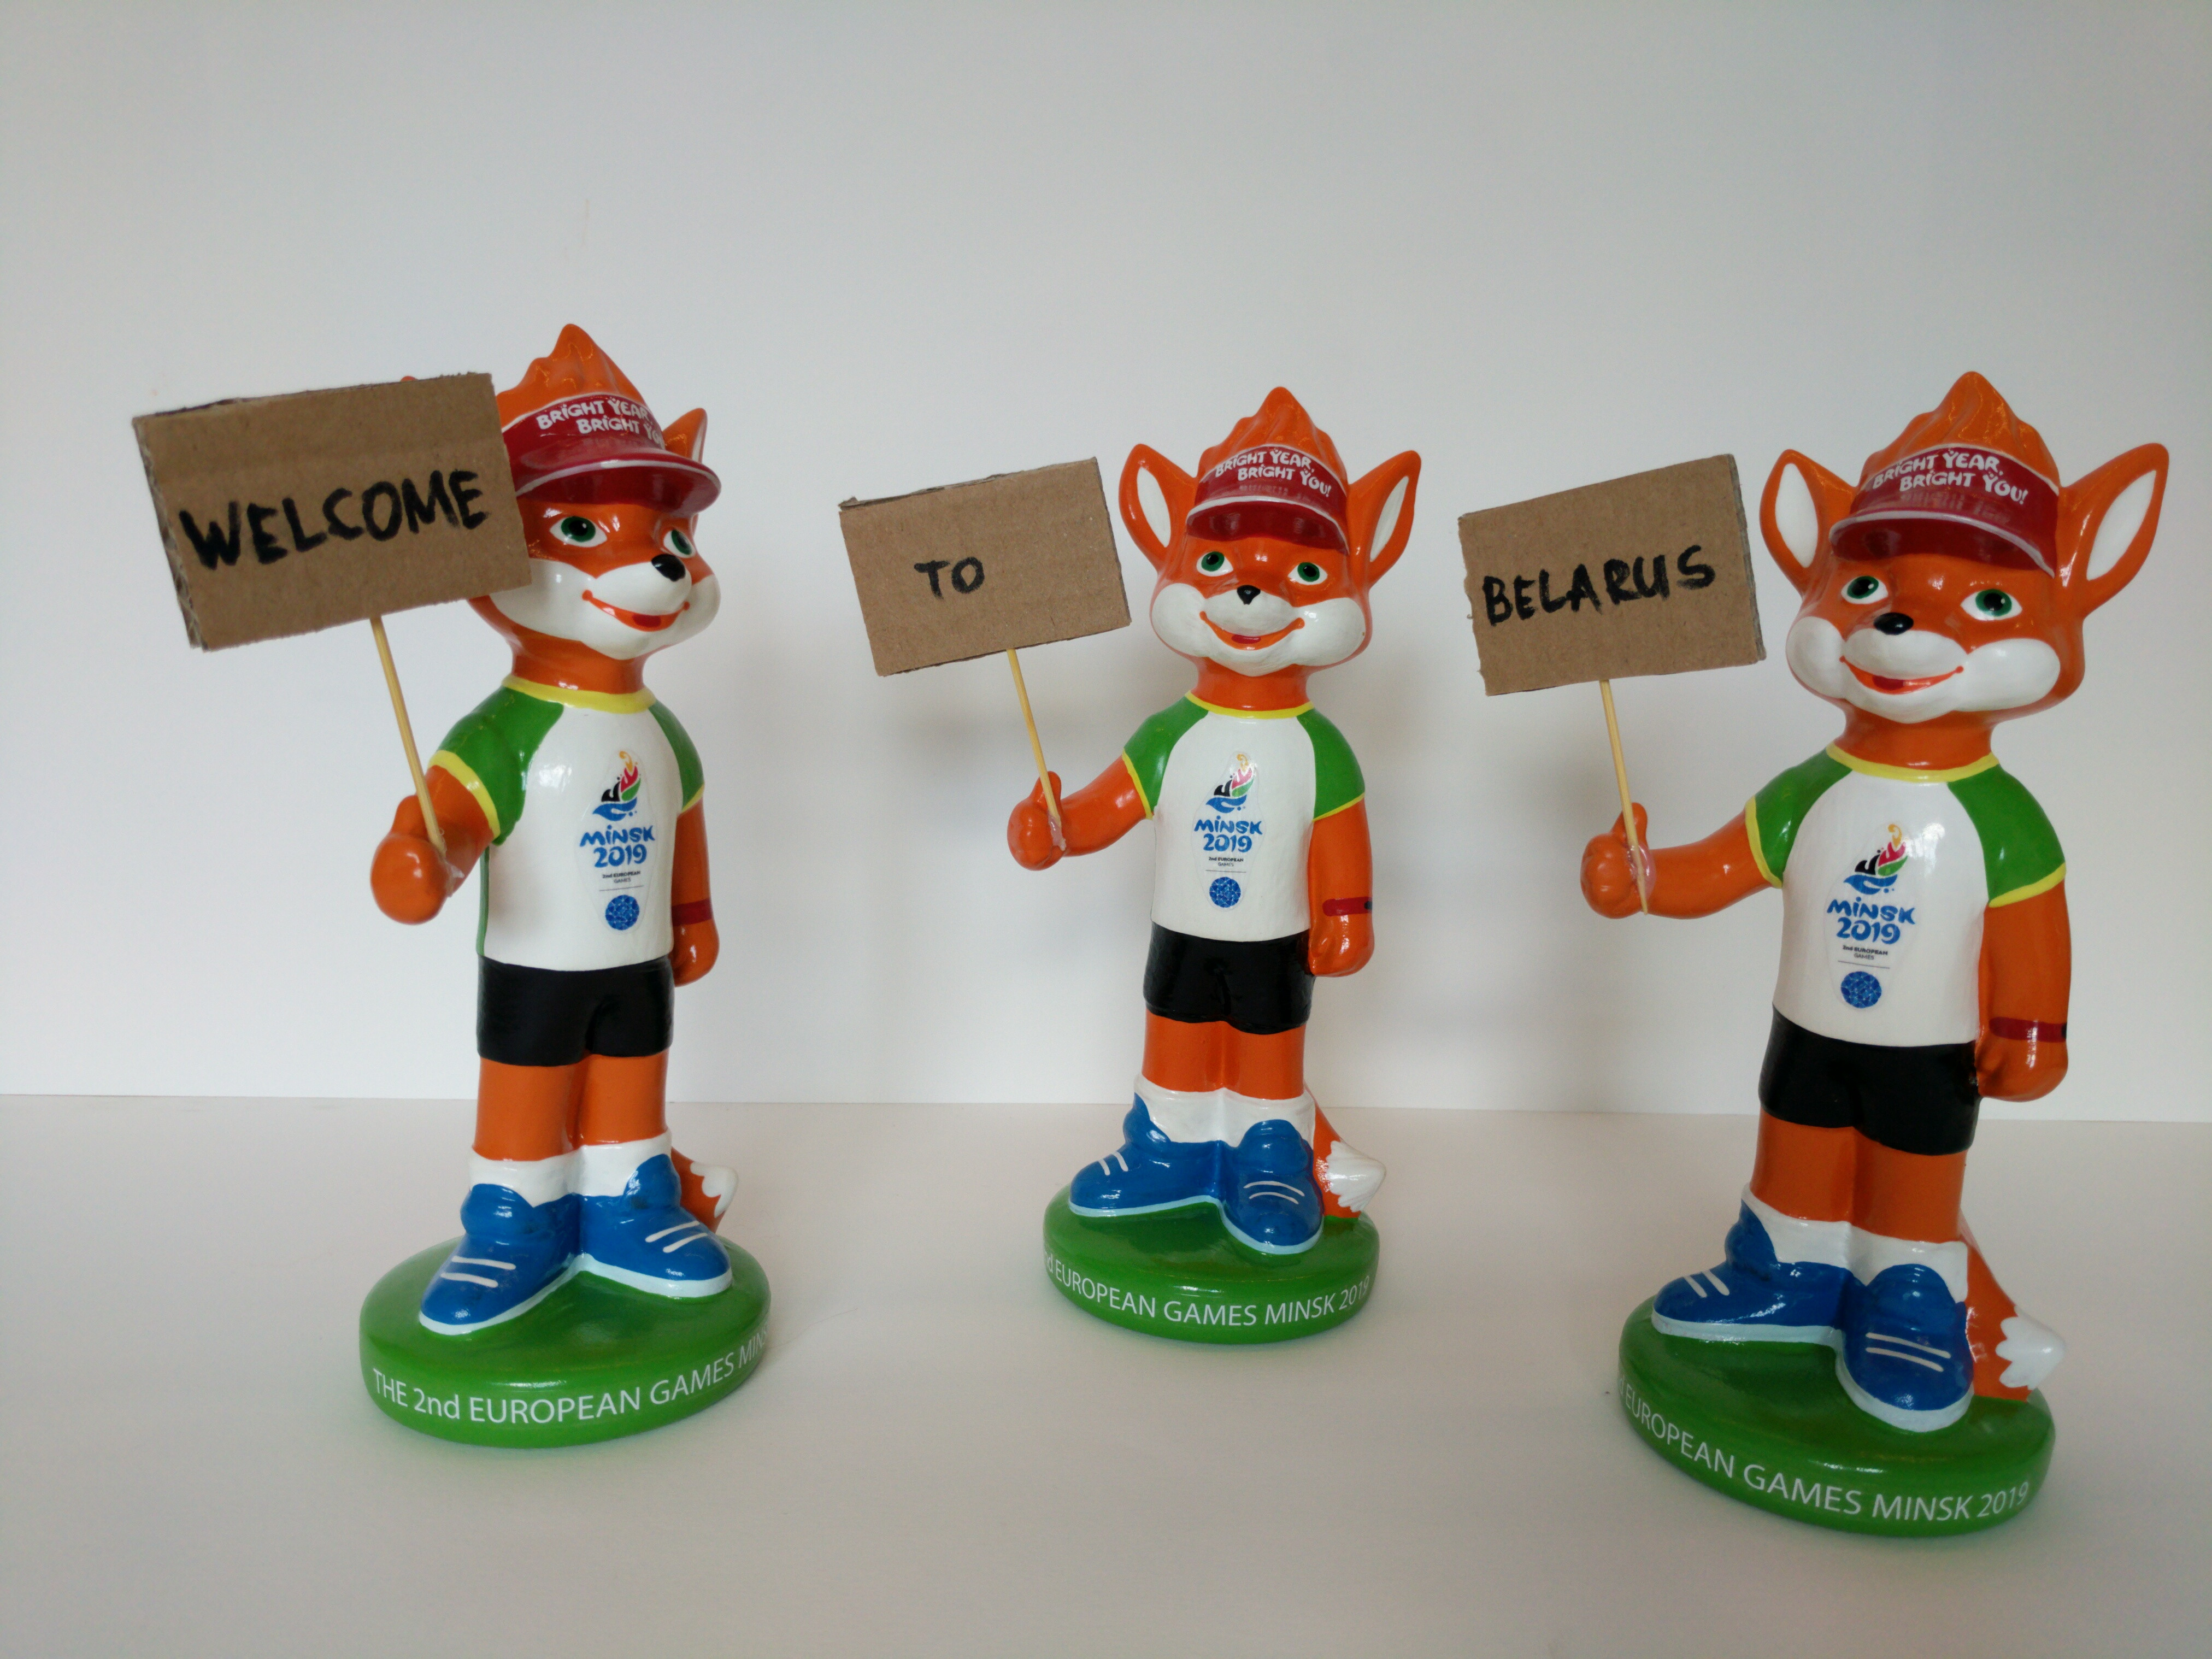 European Games Honest Tourist Guide for Belarus 2019